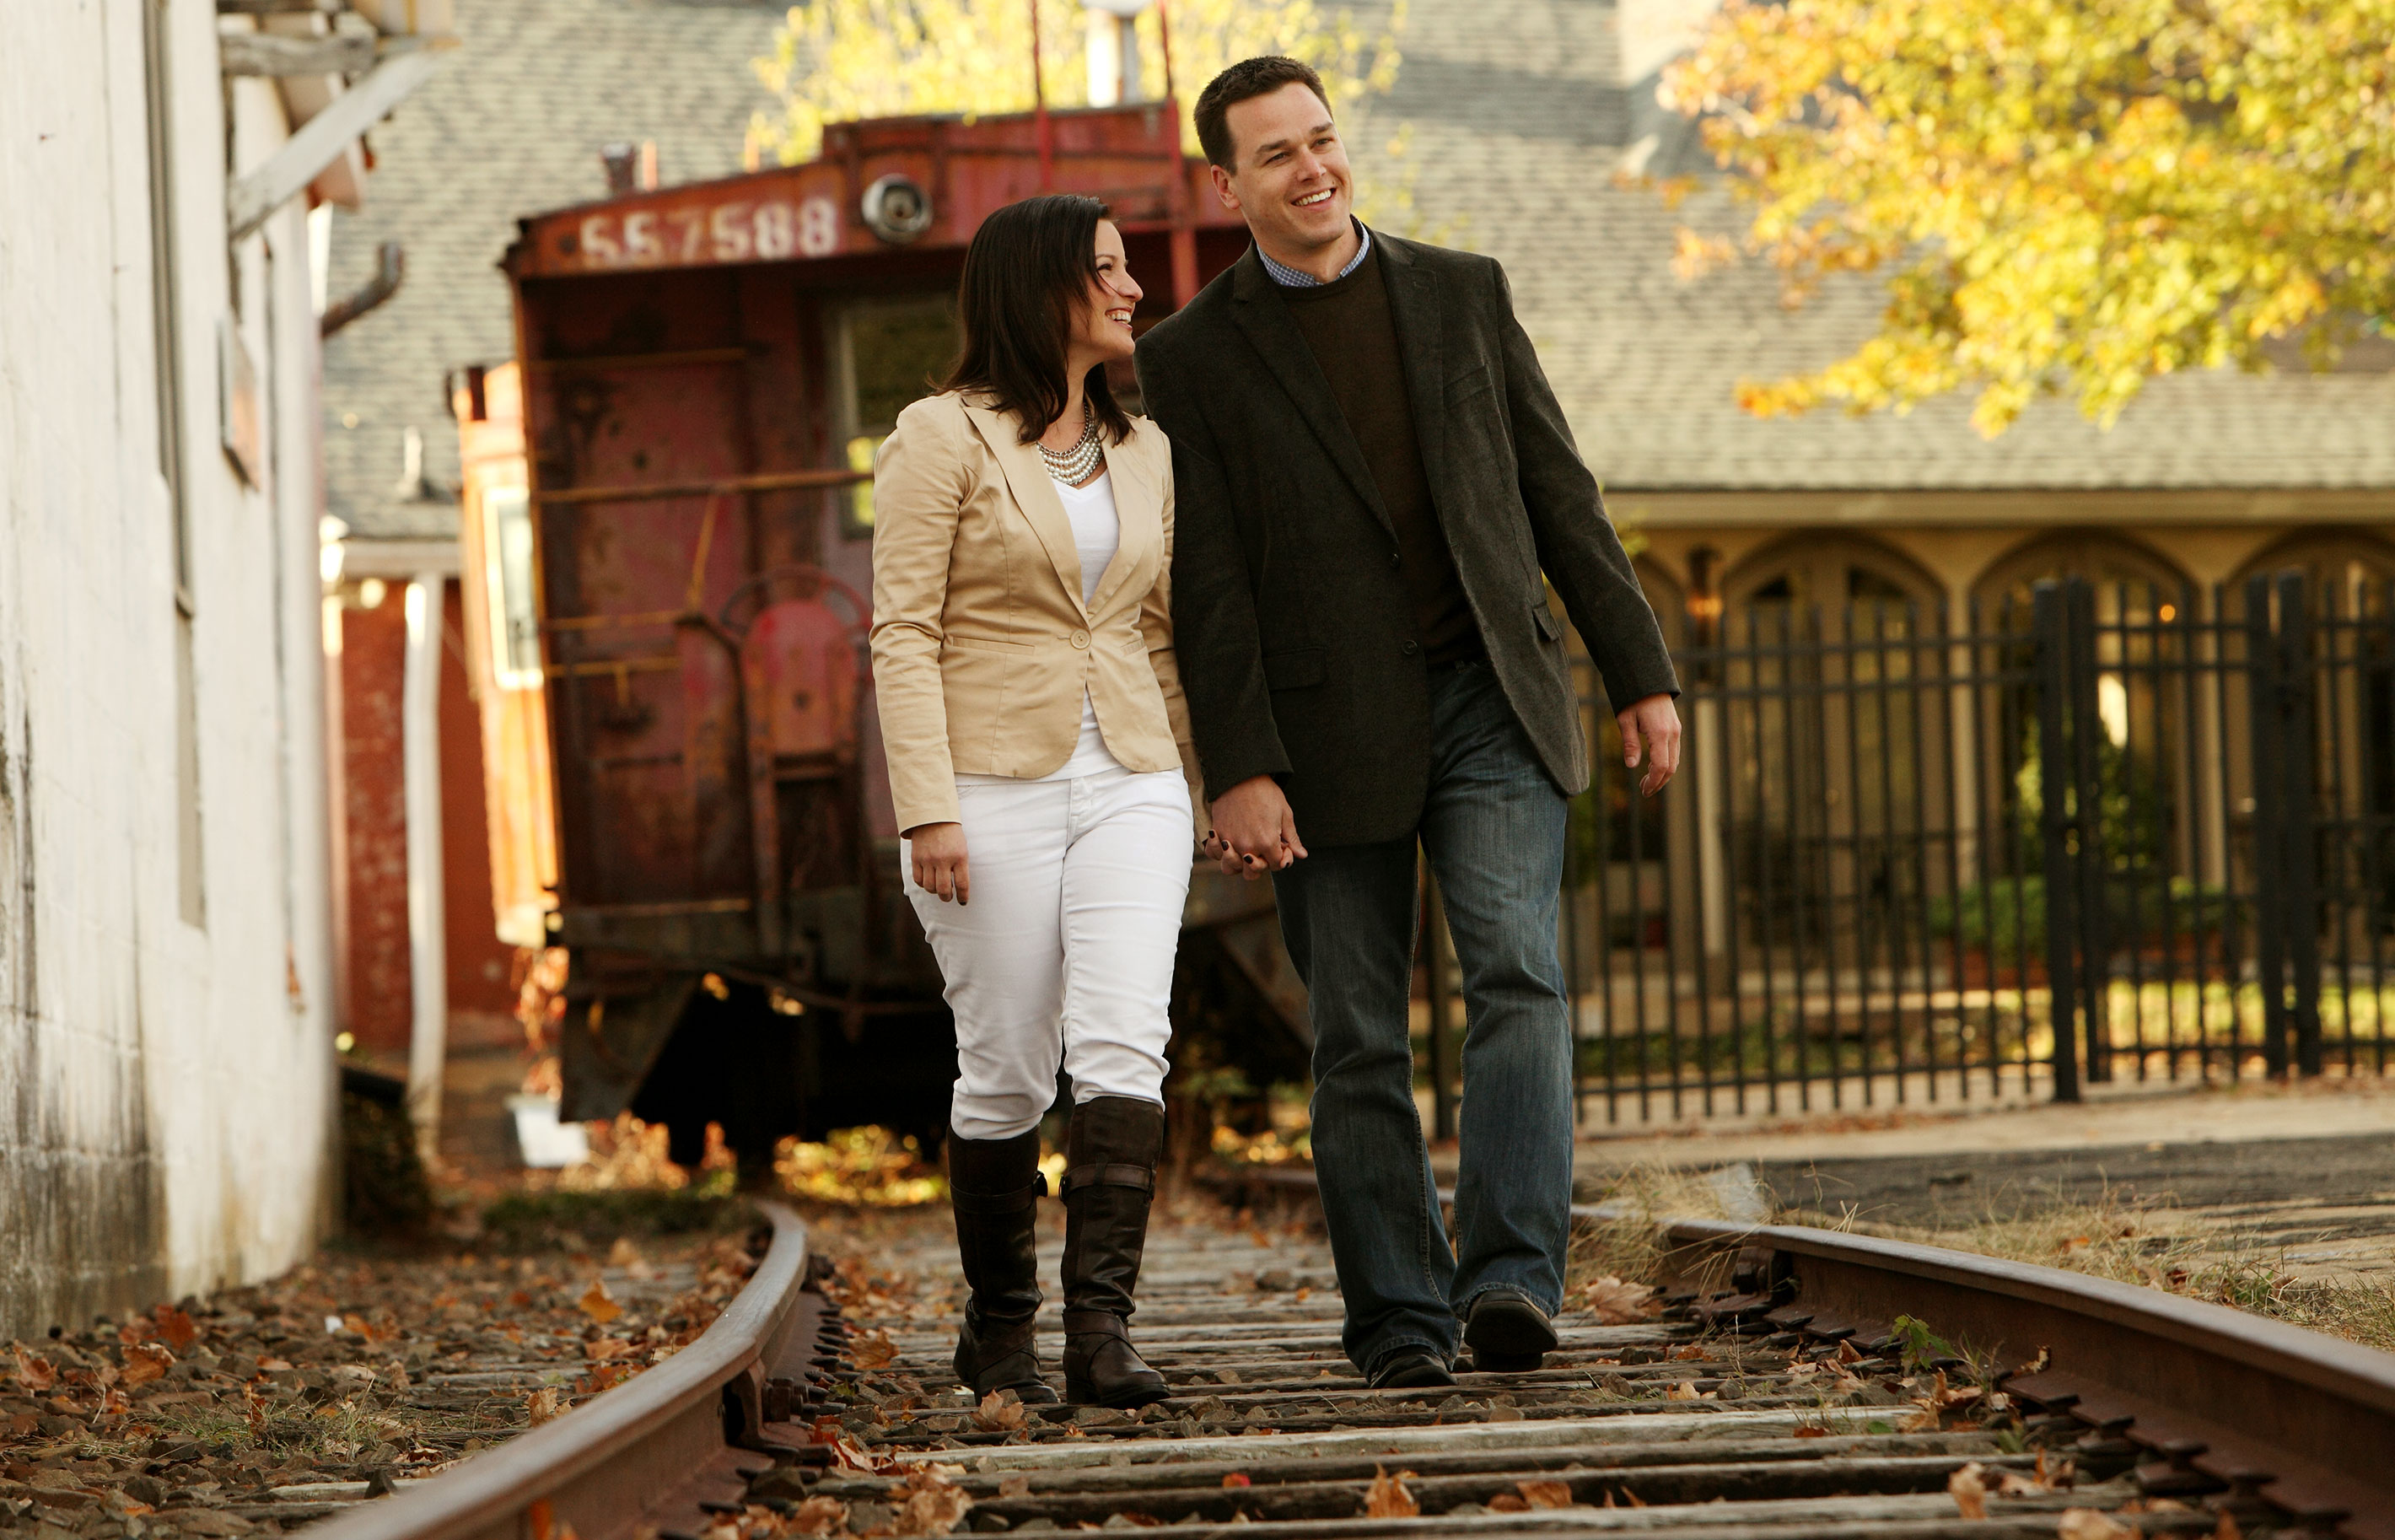 Outdoor engagement portrait on railroad tracks in Warrenton, Virginia.